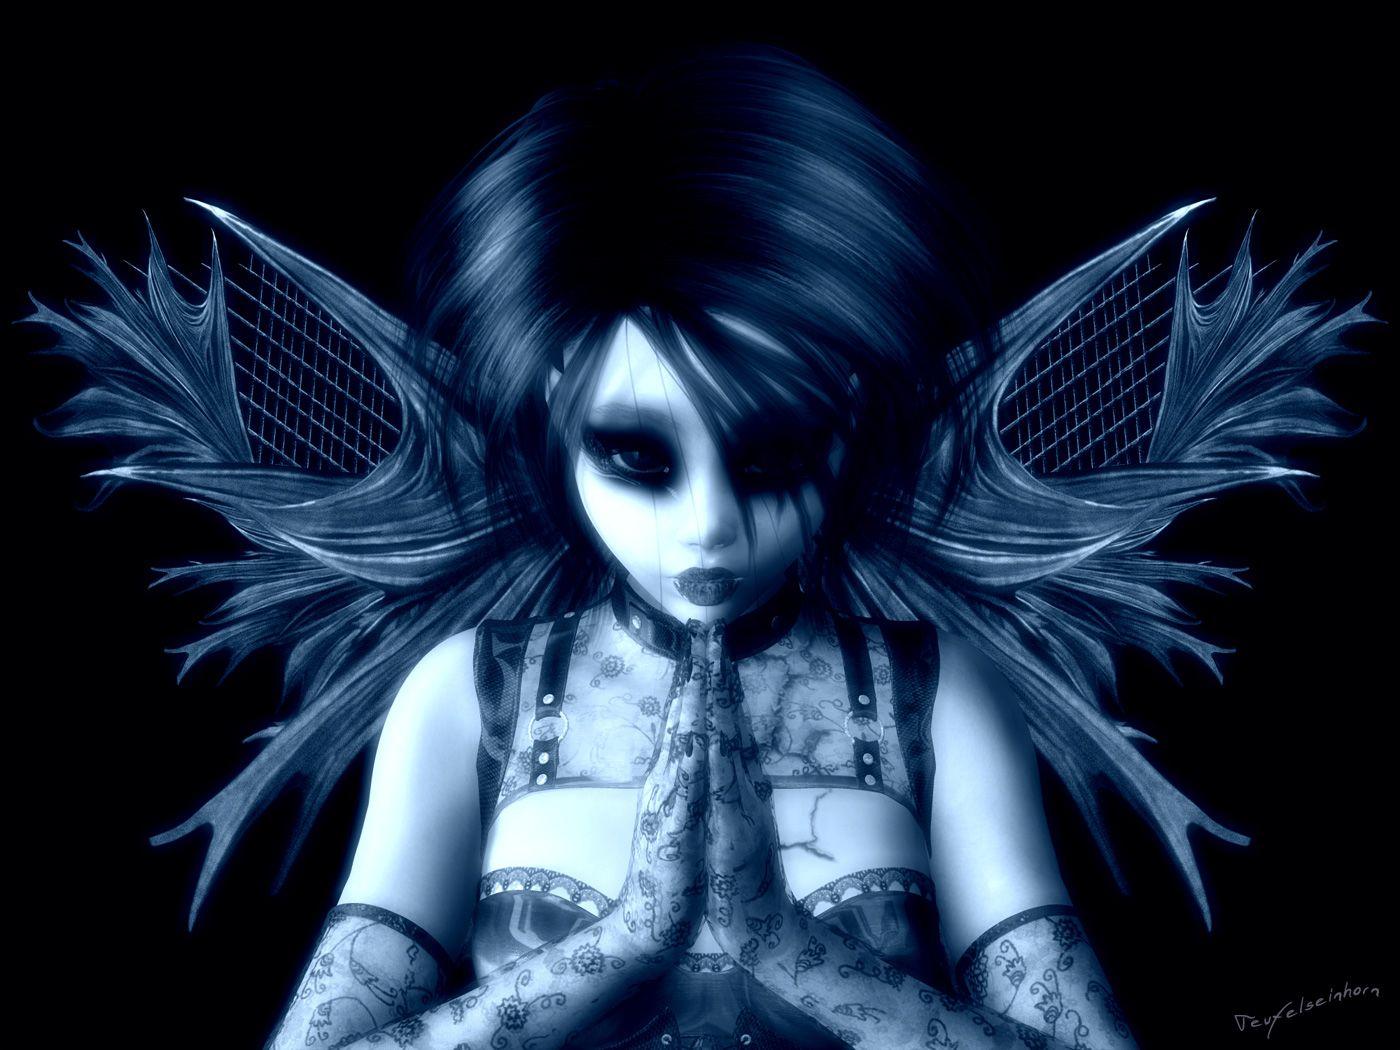 Dark angel - Other & Anime Background Wallpapers on Desktop Nexus (Image  819180)